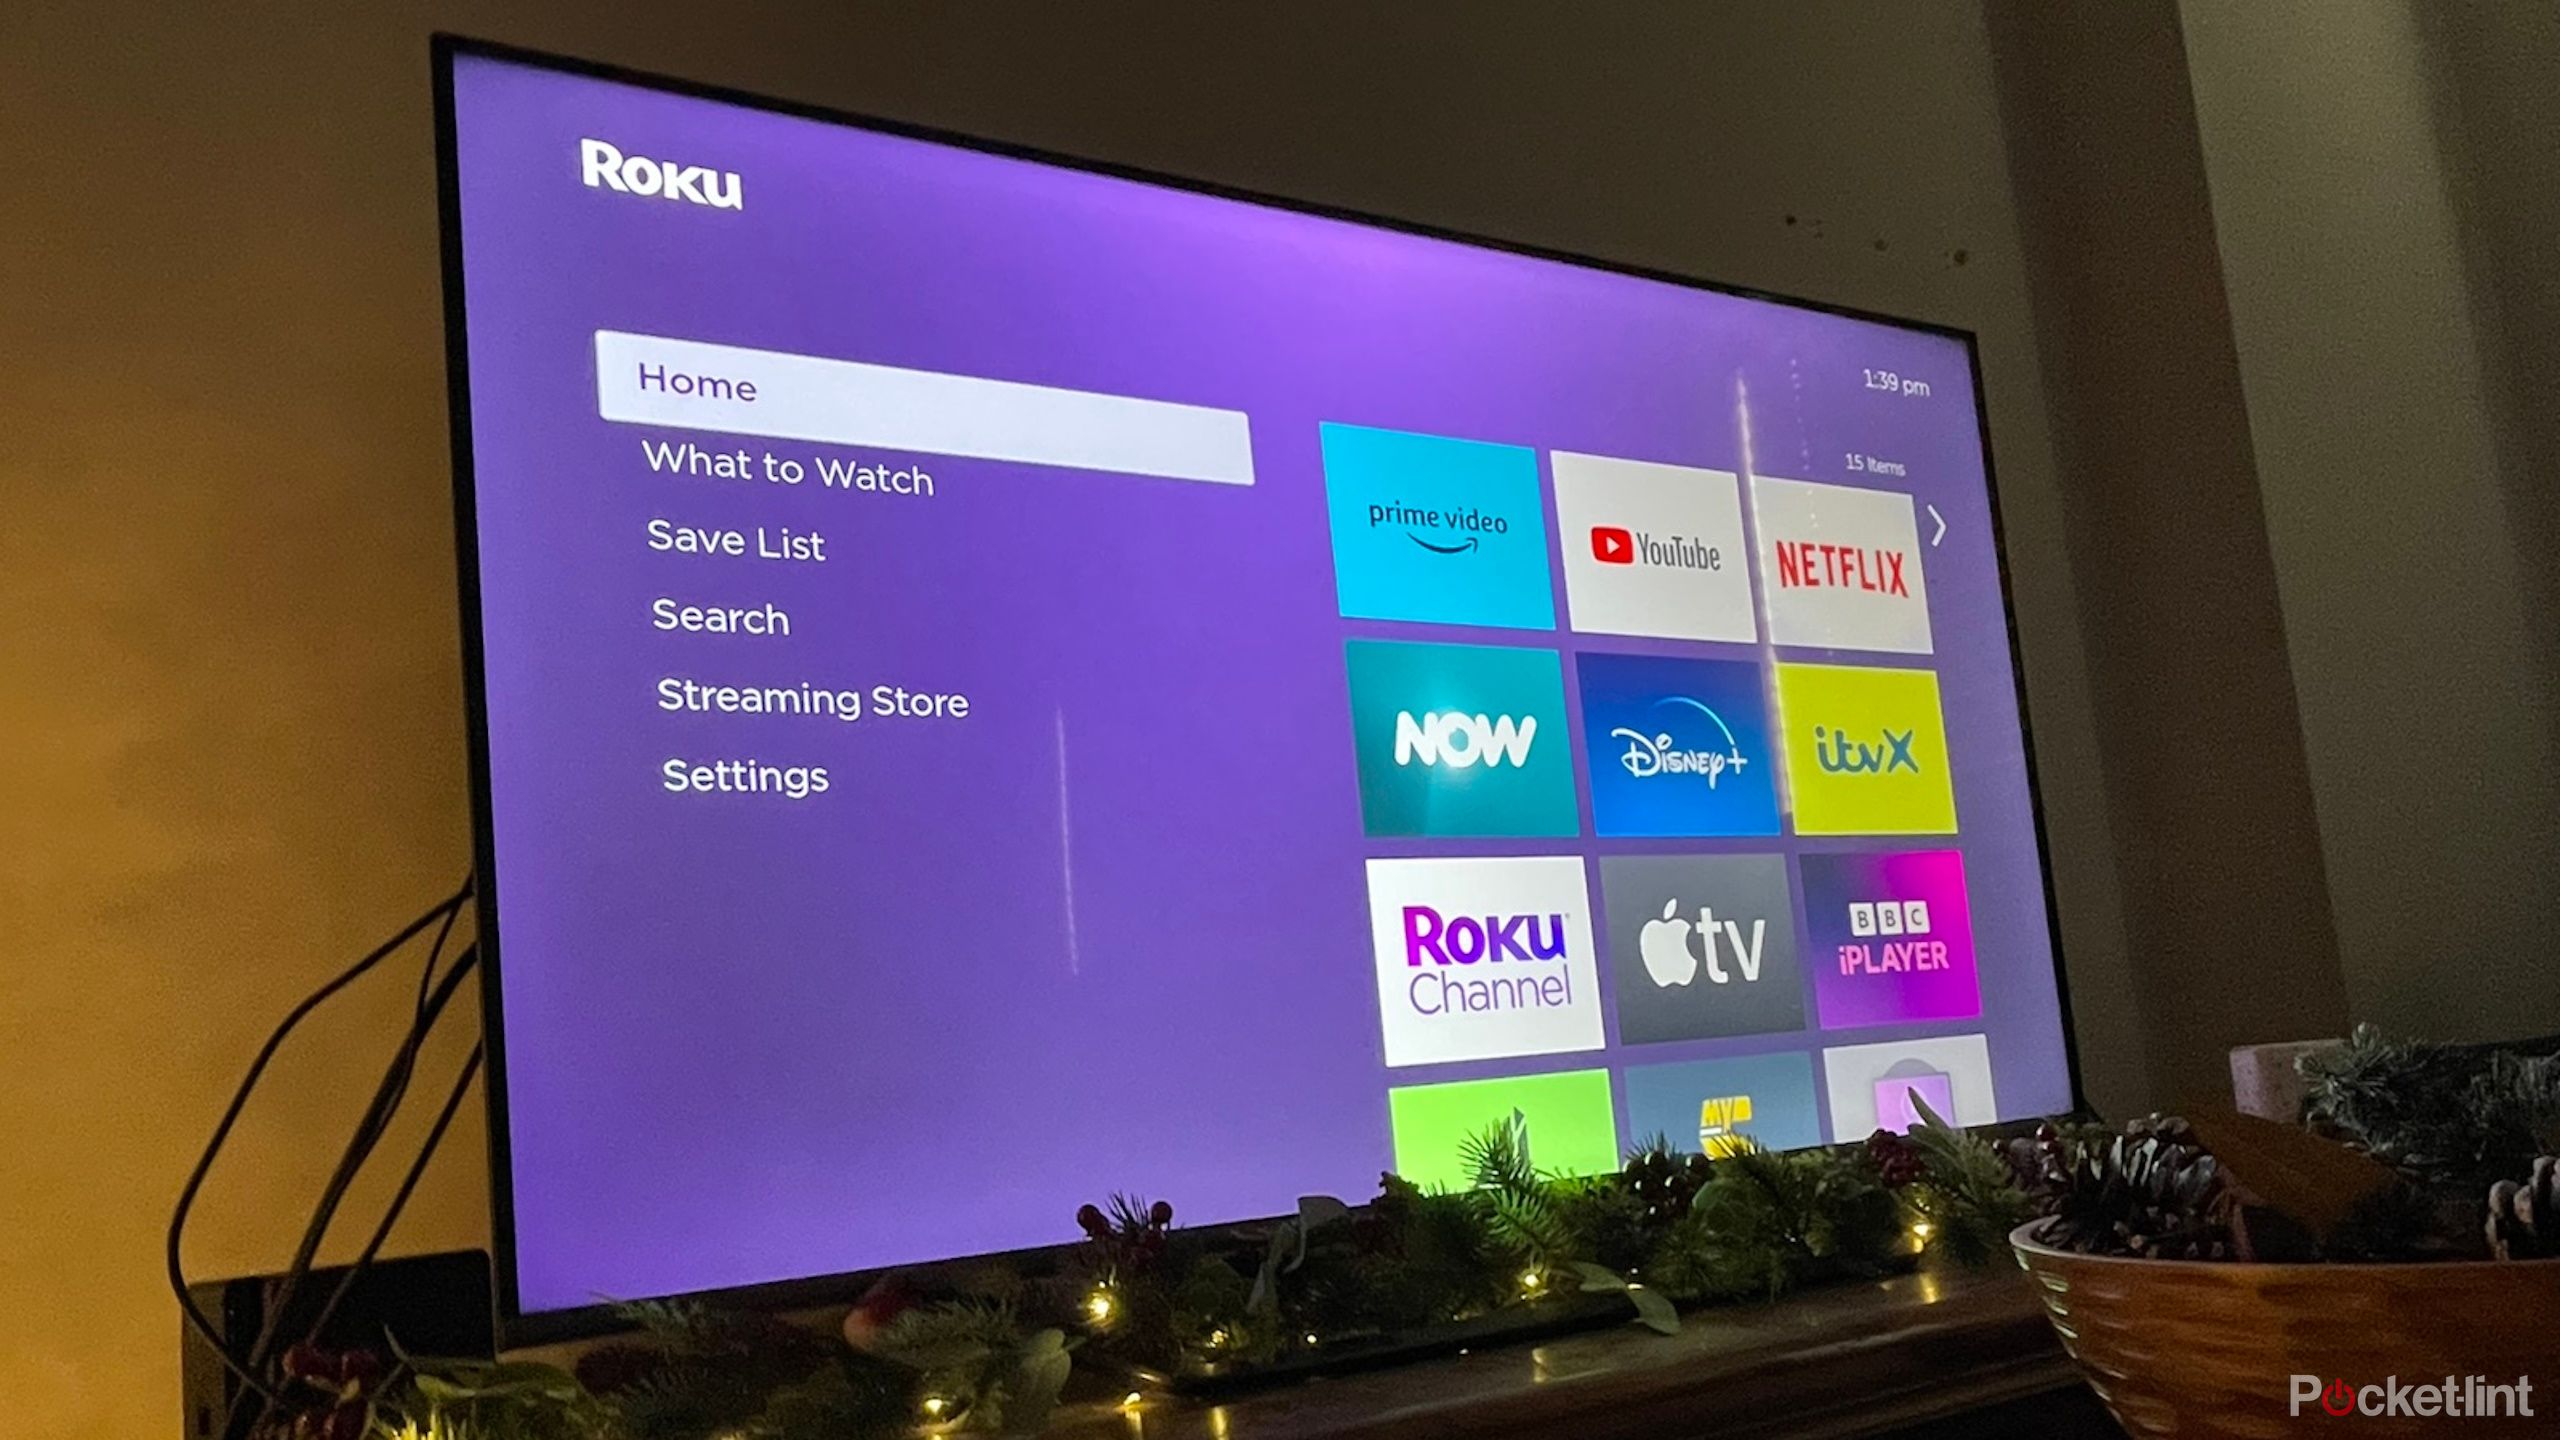 HiSense TV with Roku Express 4K streaming stick showing Roku home screen